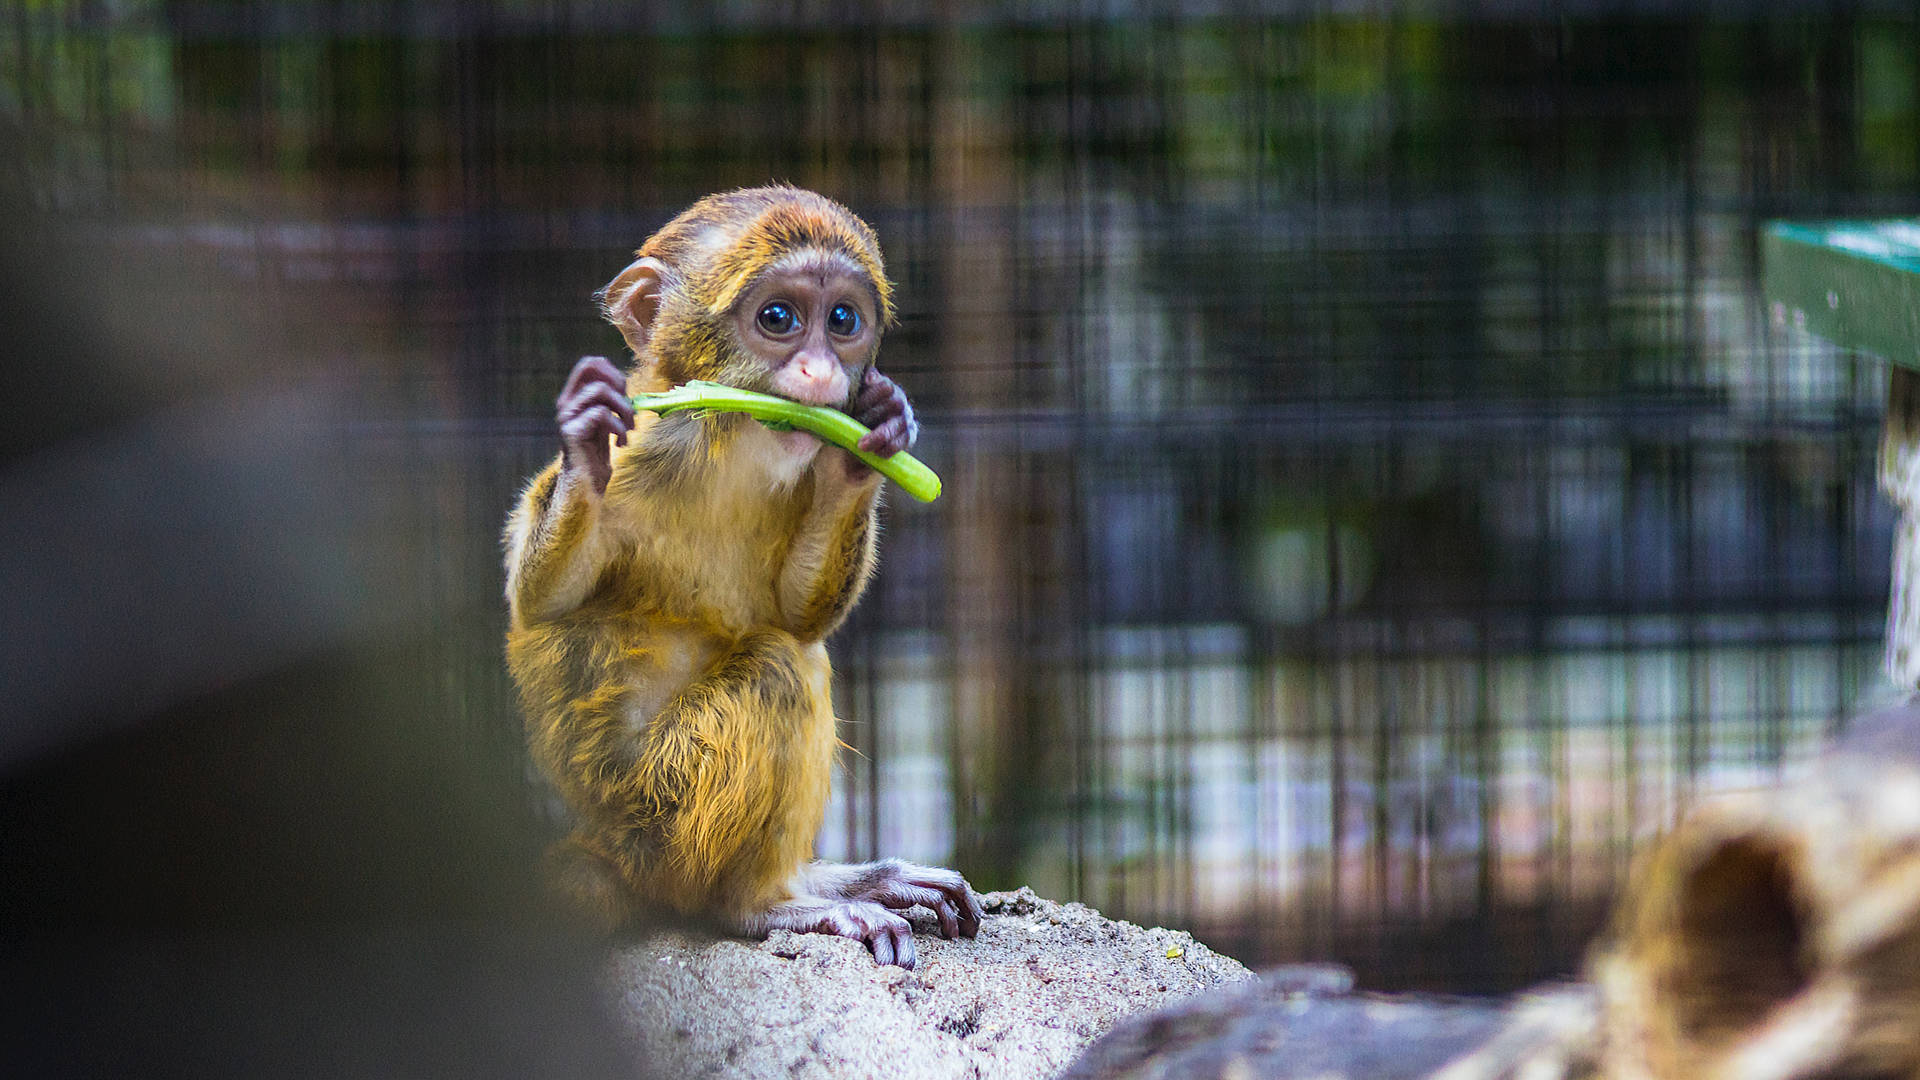 Cute Animal Monkey Infant Eating Celery